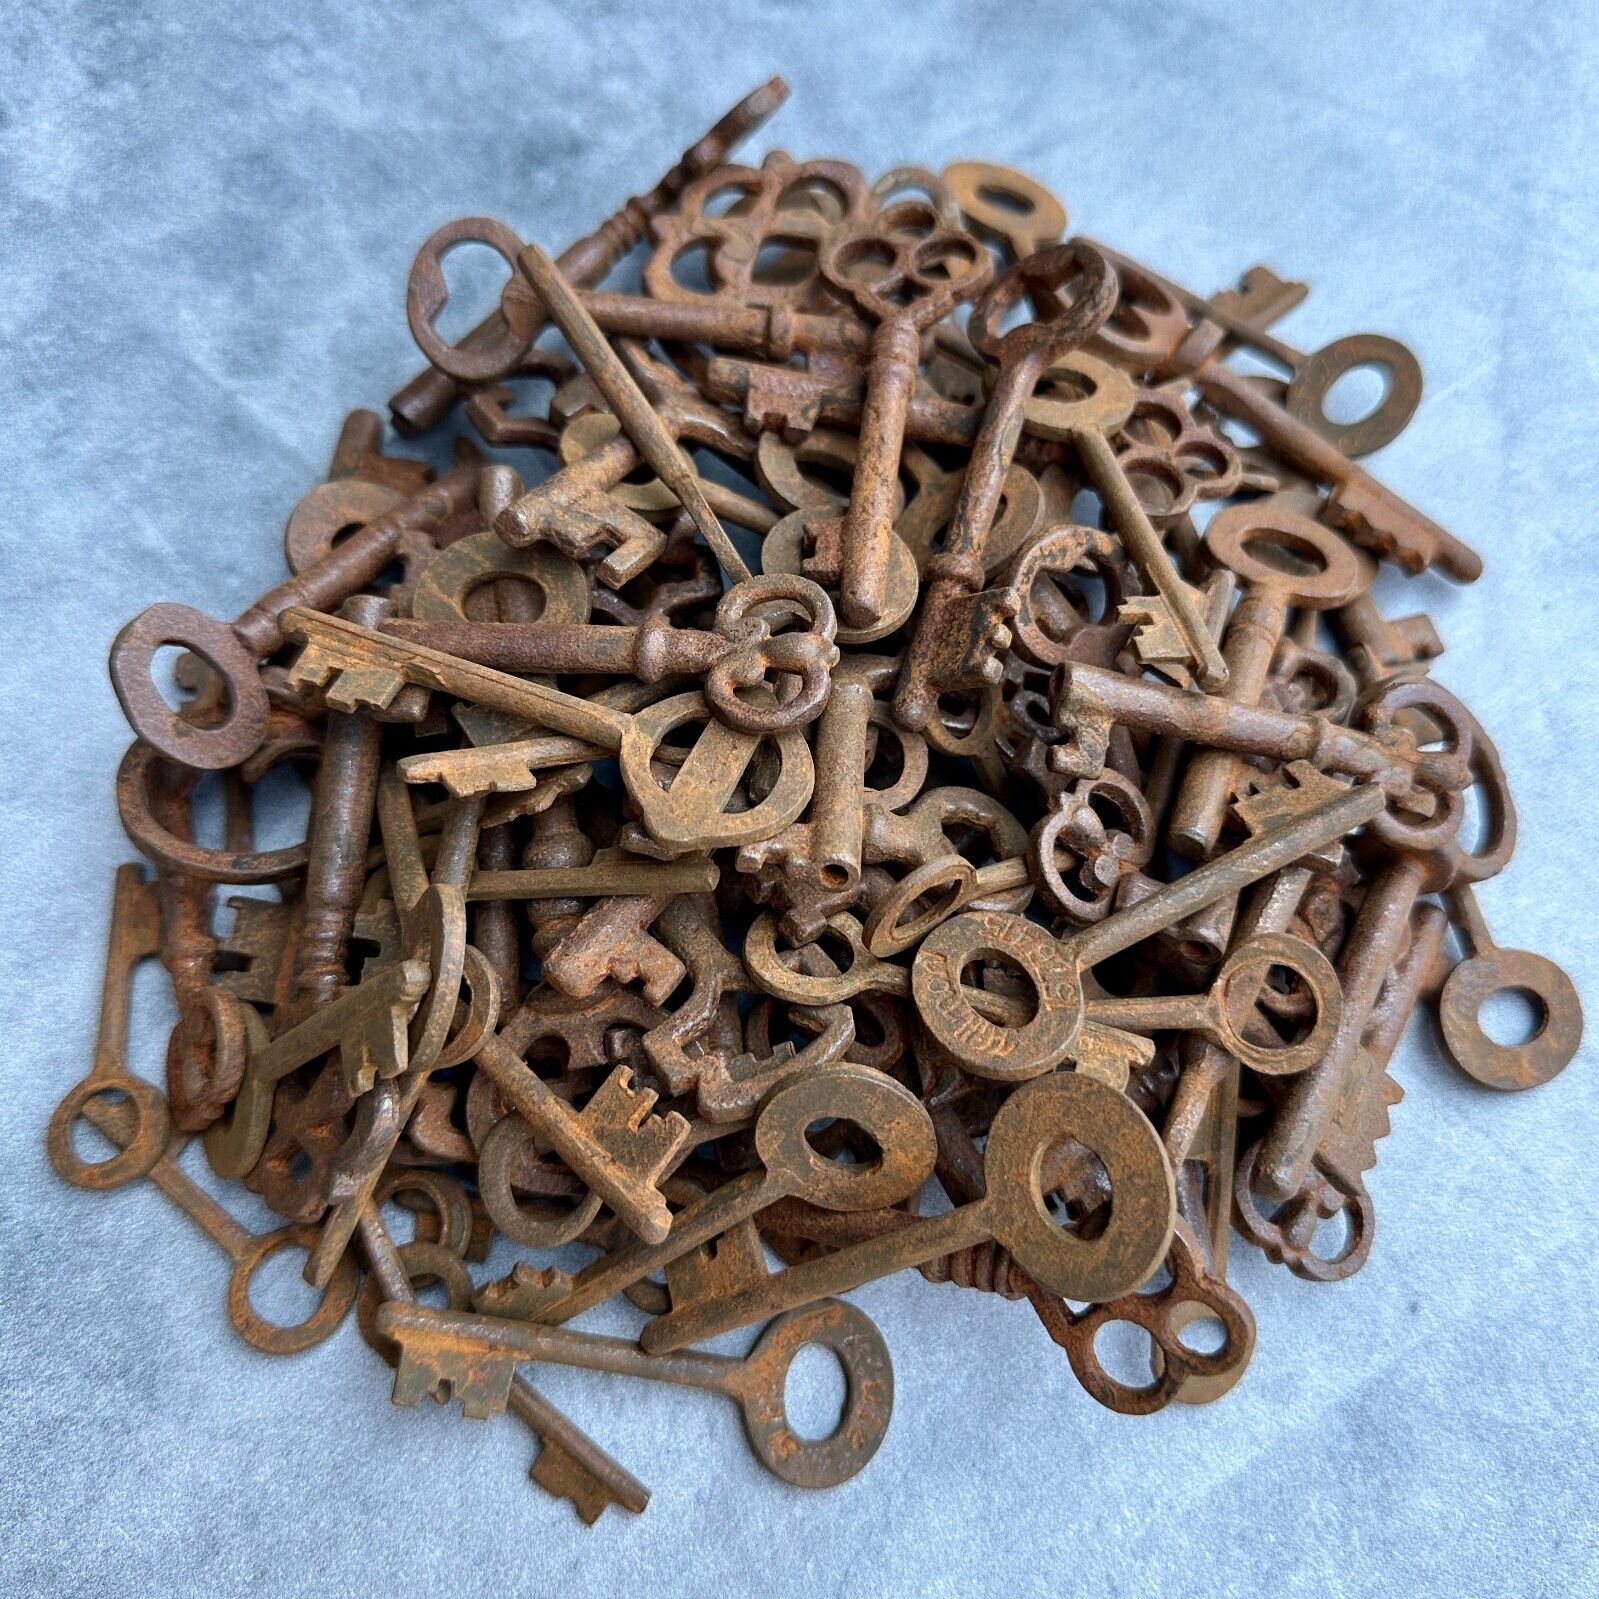 Antique Vintage Style 19th Century Cast Iron Keys Lot of 100